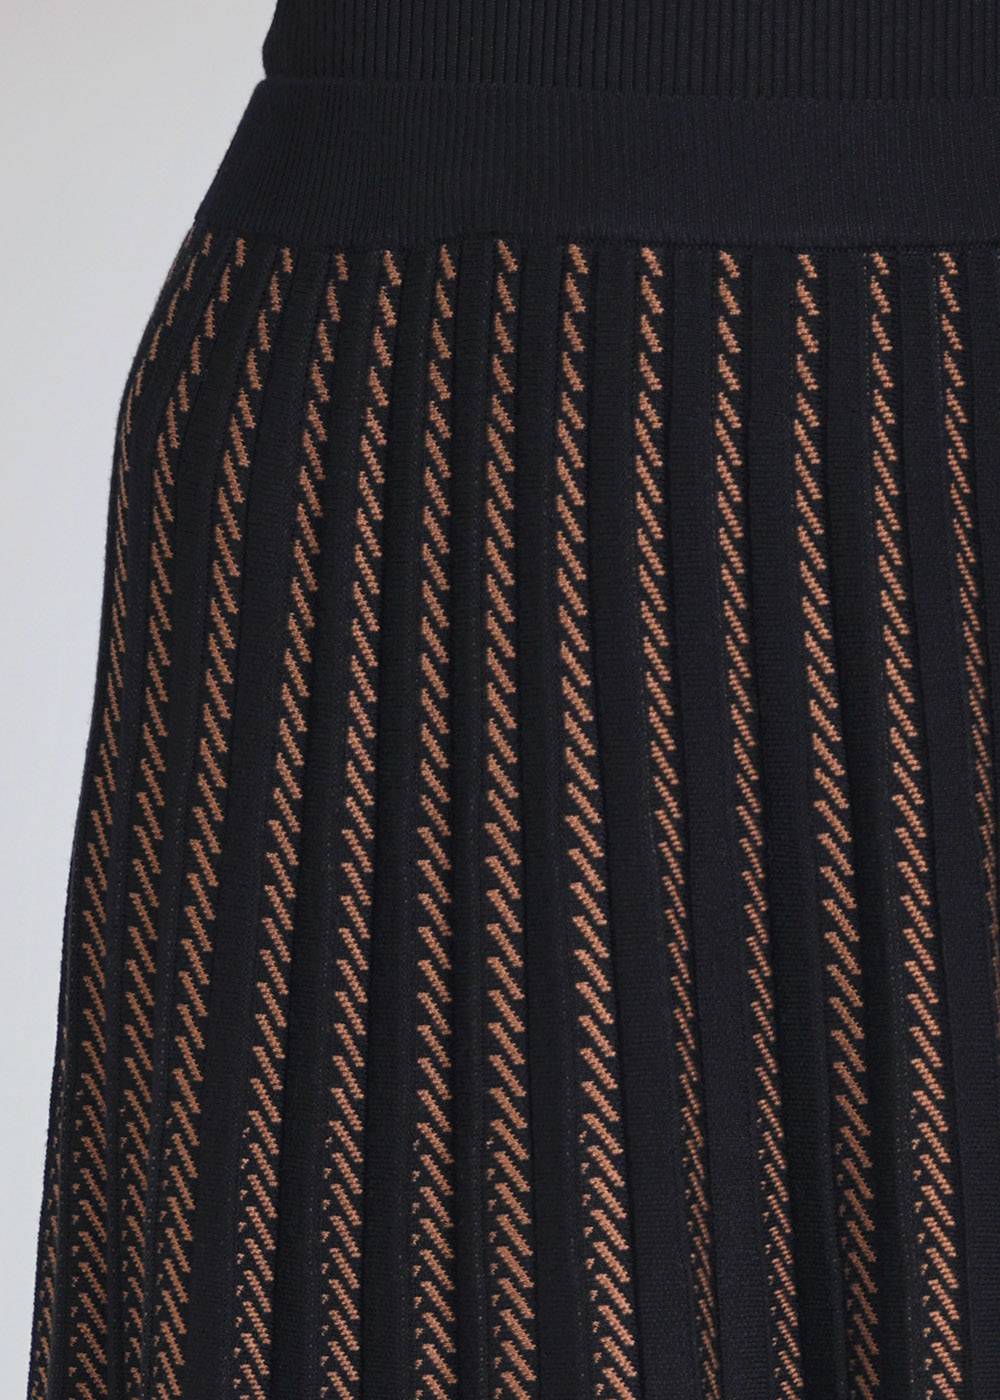 Rib Knit Midi Skirt: Subtle Camel Details